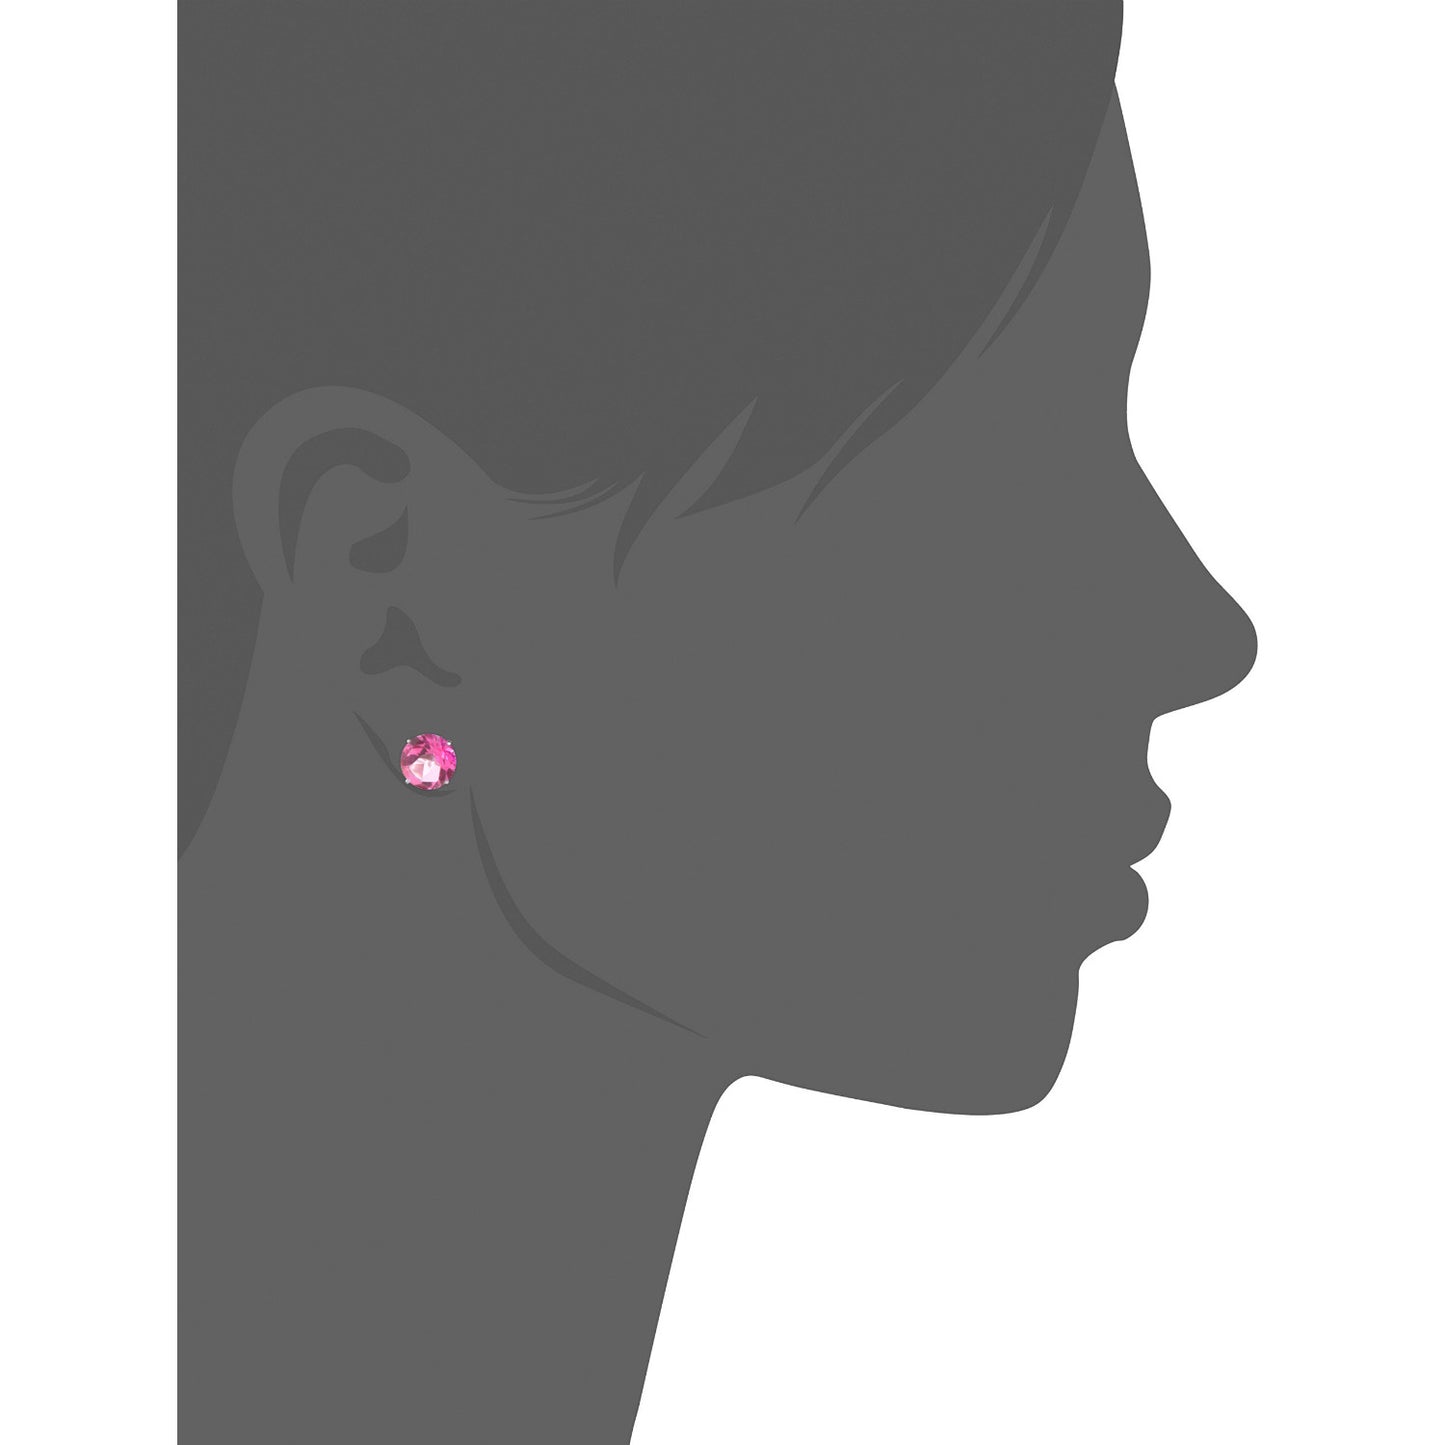 14Kt White Gold Pink Topaz Earring - Pinctore